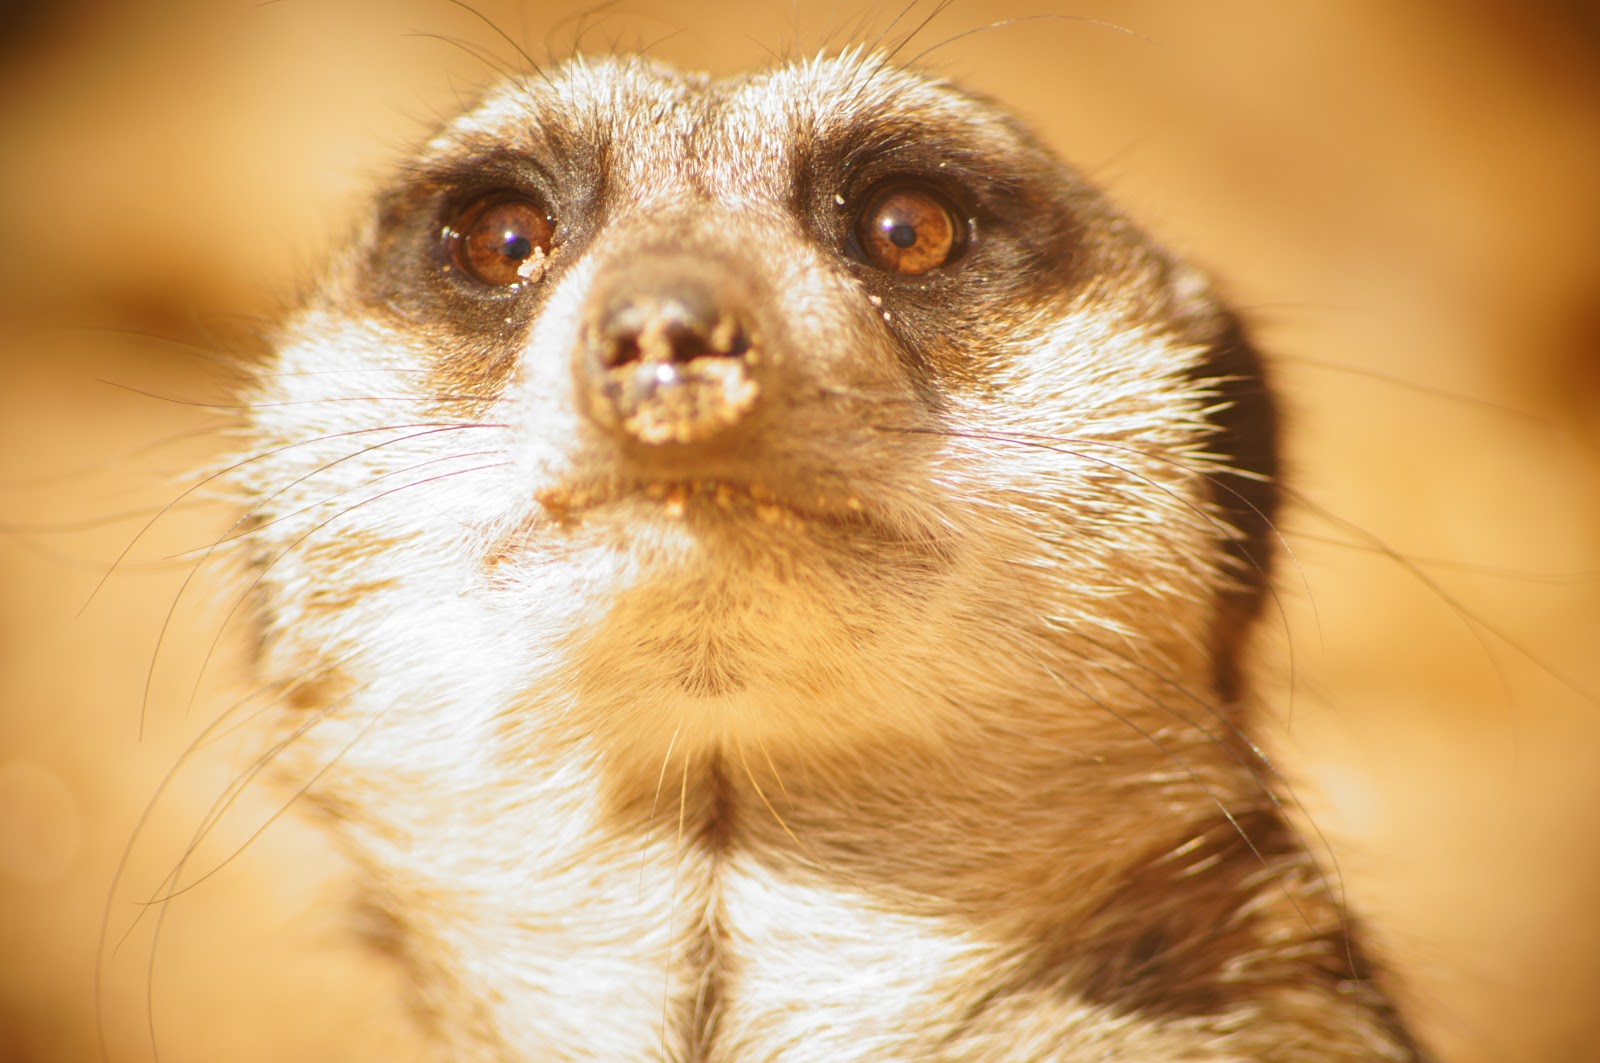 royalty free image of a meerkat